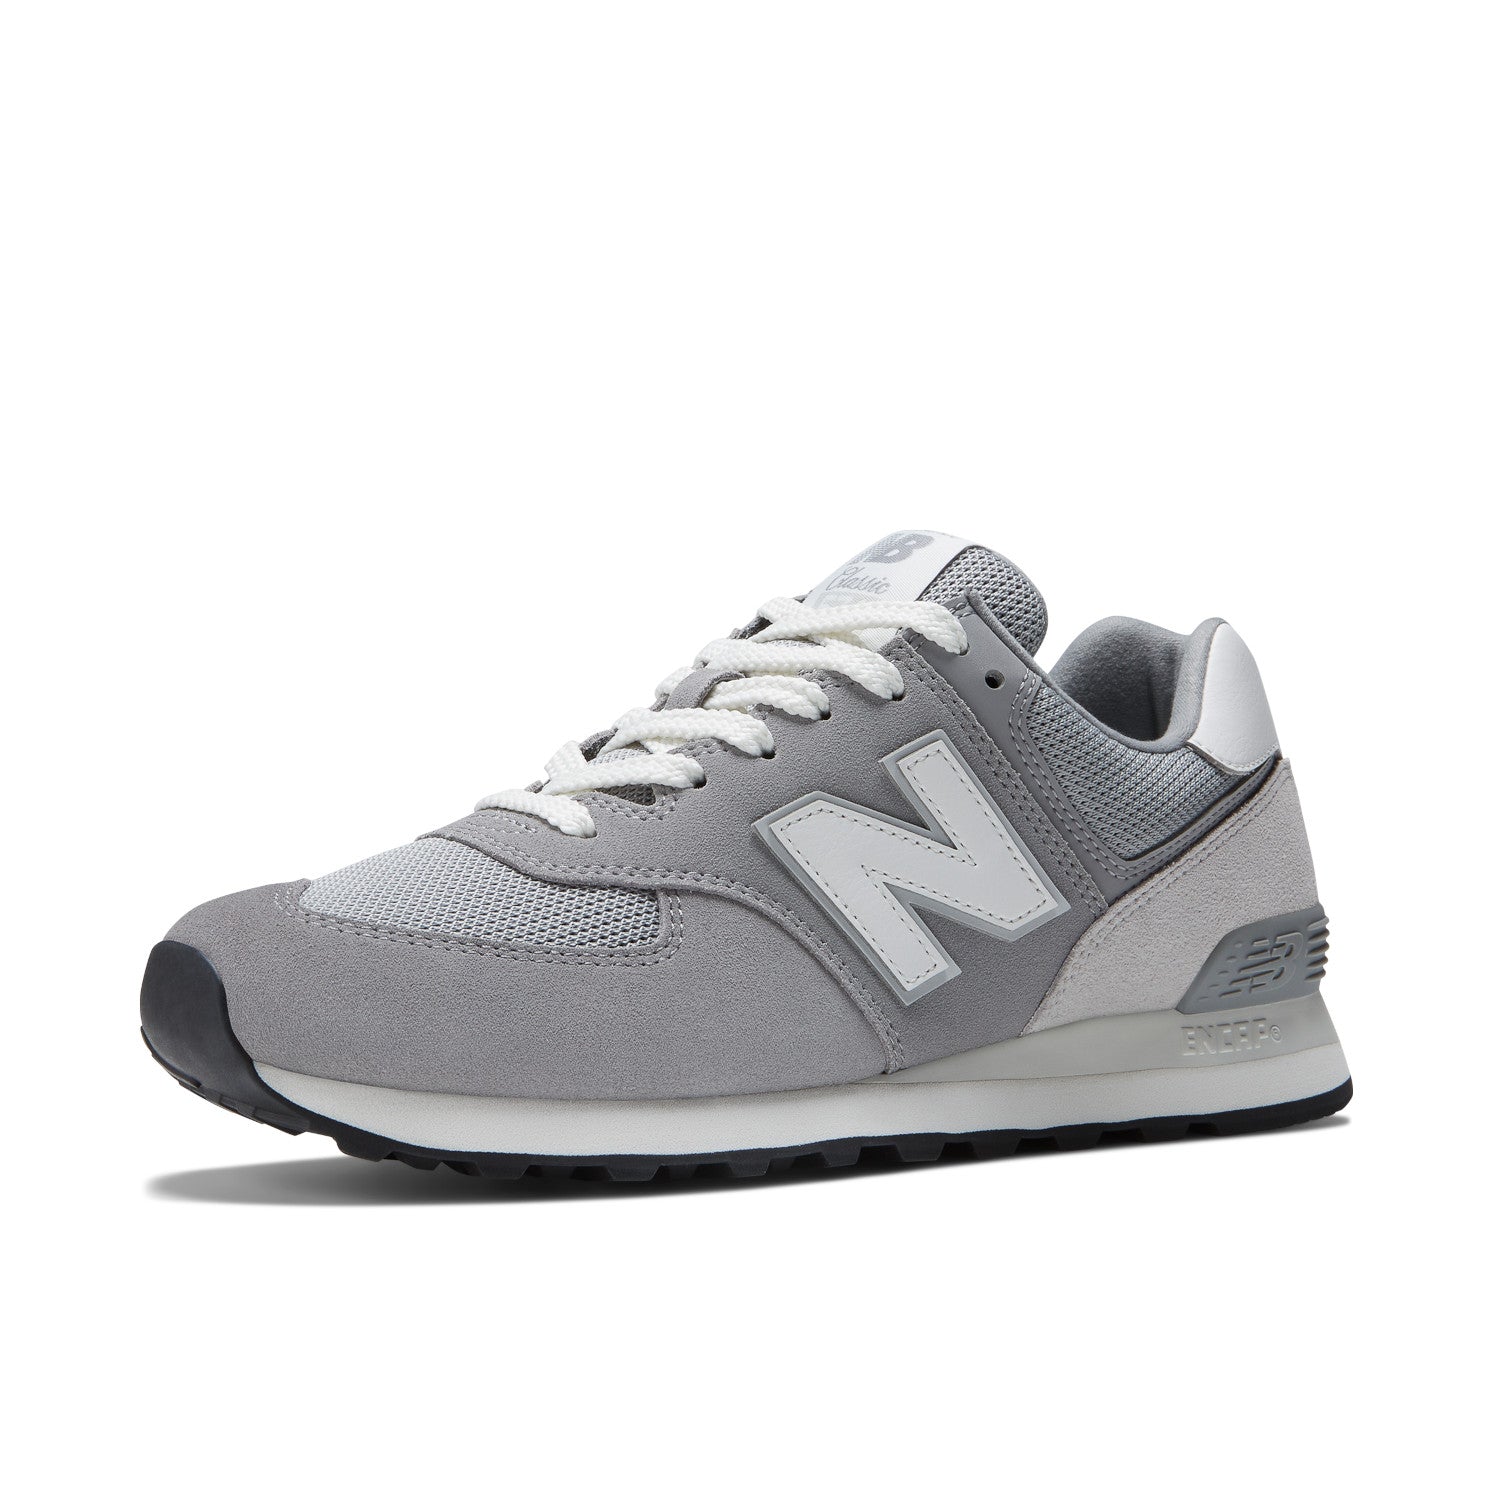 New Balance 574 Color: Grey